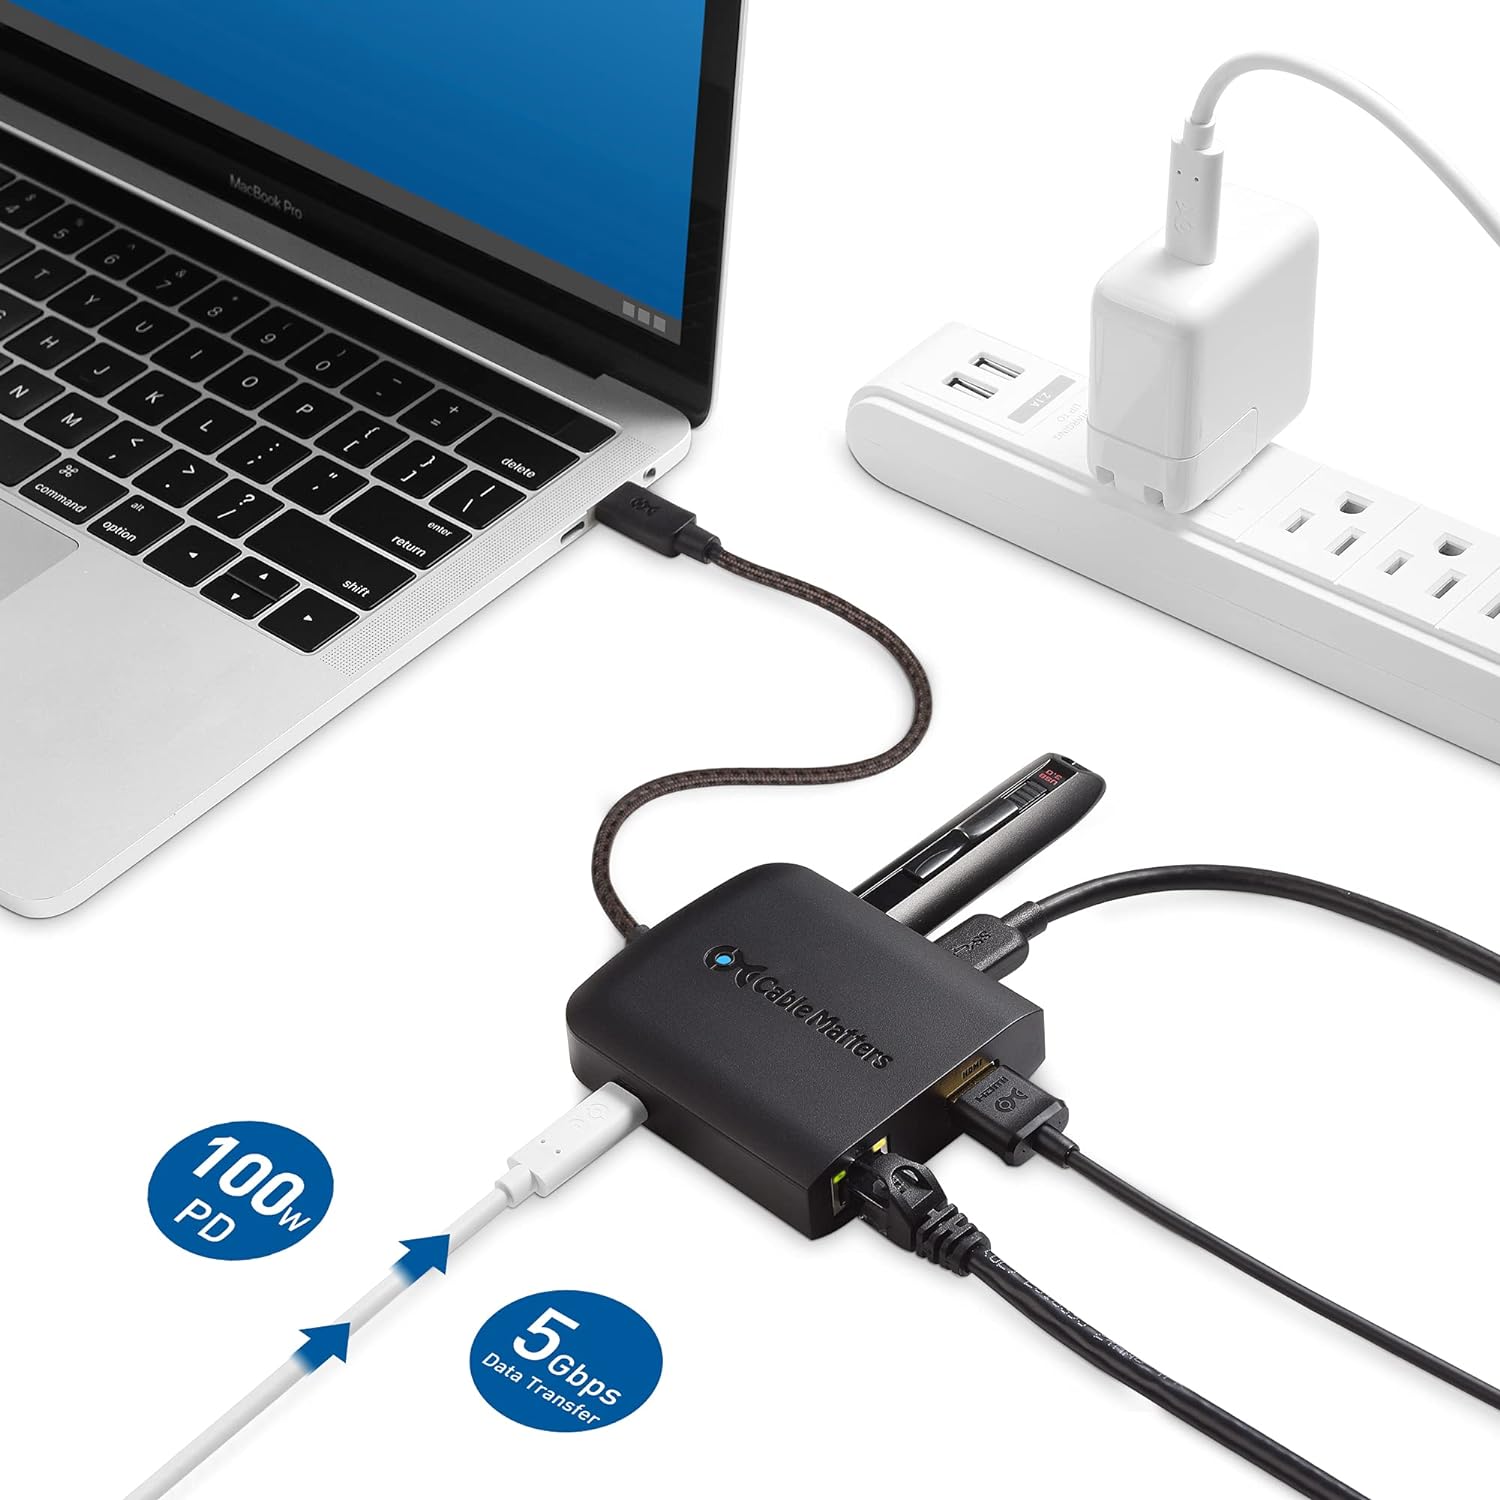 Cable Matters 8K@60Hz USB C Hub HDMI 2.1 (USB-C HDMI Dock 4K@120Hz, USB C HDMI 2.1 Hub) with USB 3.0, Gigabit Ethernet, 100W Charging, Thunderbolt 4/USB4 Compatible with Surface Pro, MacBook Pro, XPS